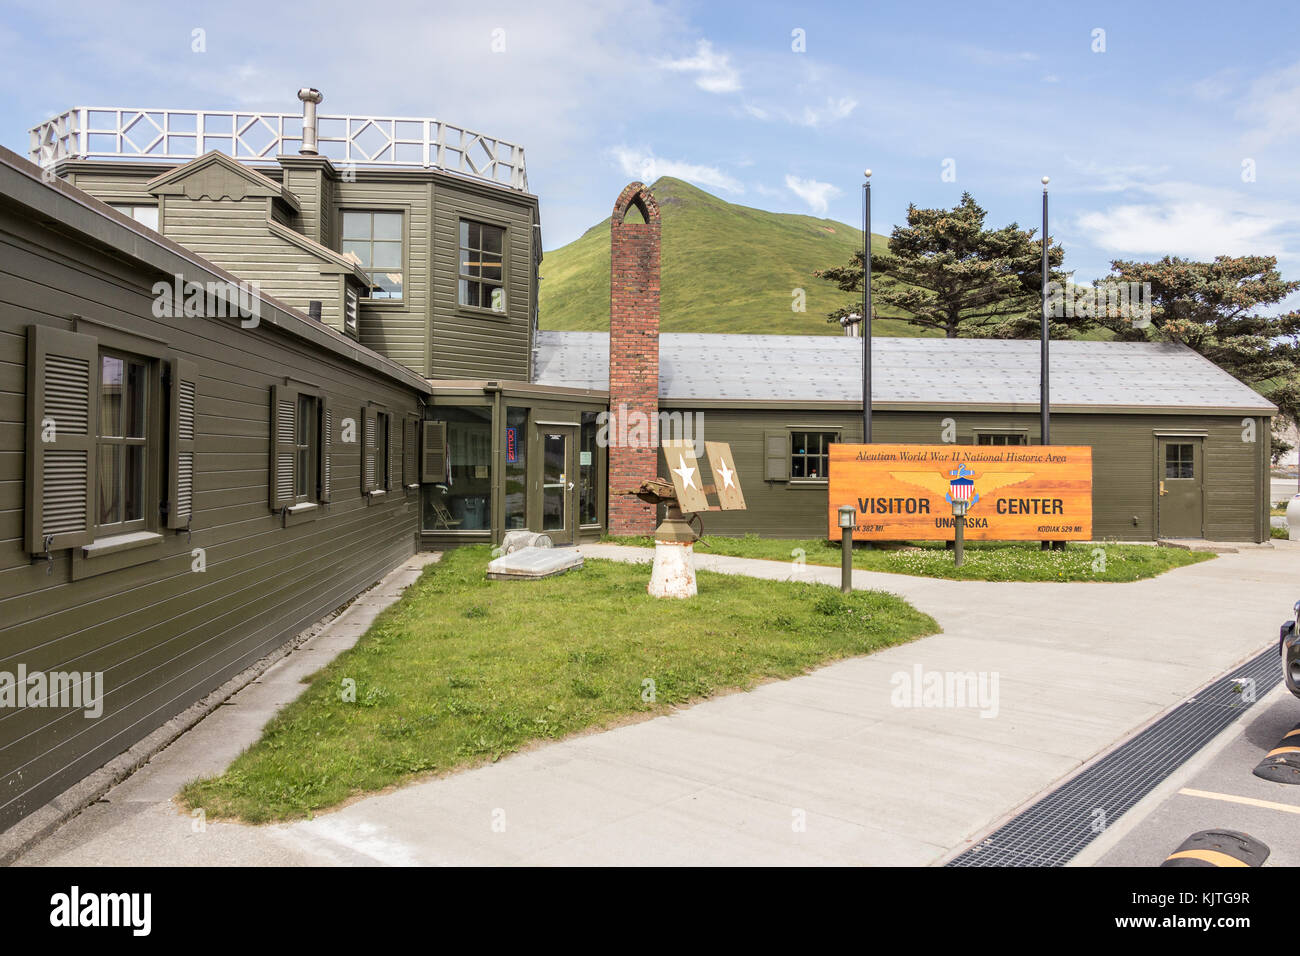 Dutch Harbor, Unalaska, Alaska, USA - August 14th, 2017: The Visitor Center of Unalaska, Dutch Harbor, Alaska. Stock Photo